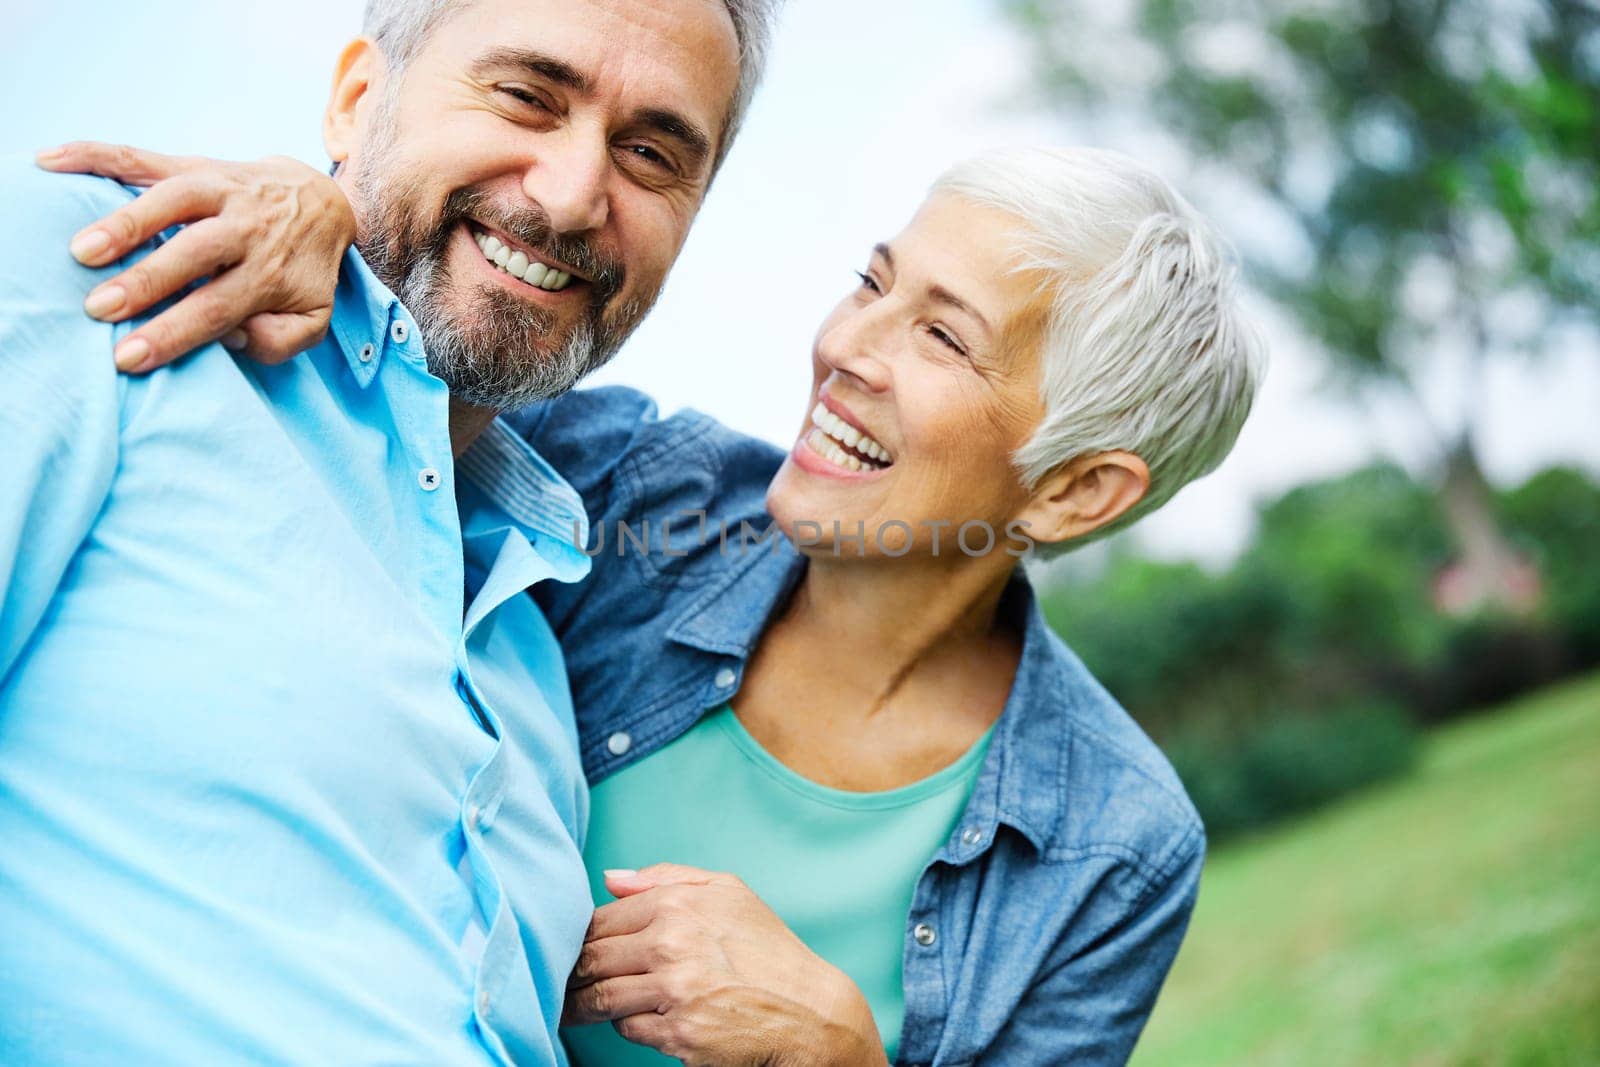 portrait of happy smiling senior couple outdoors